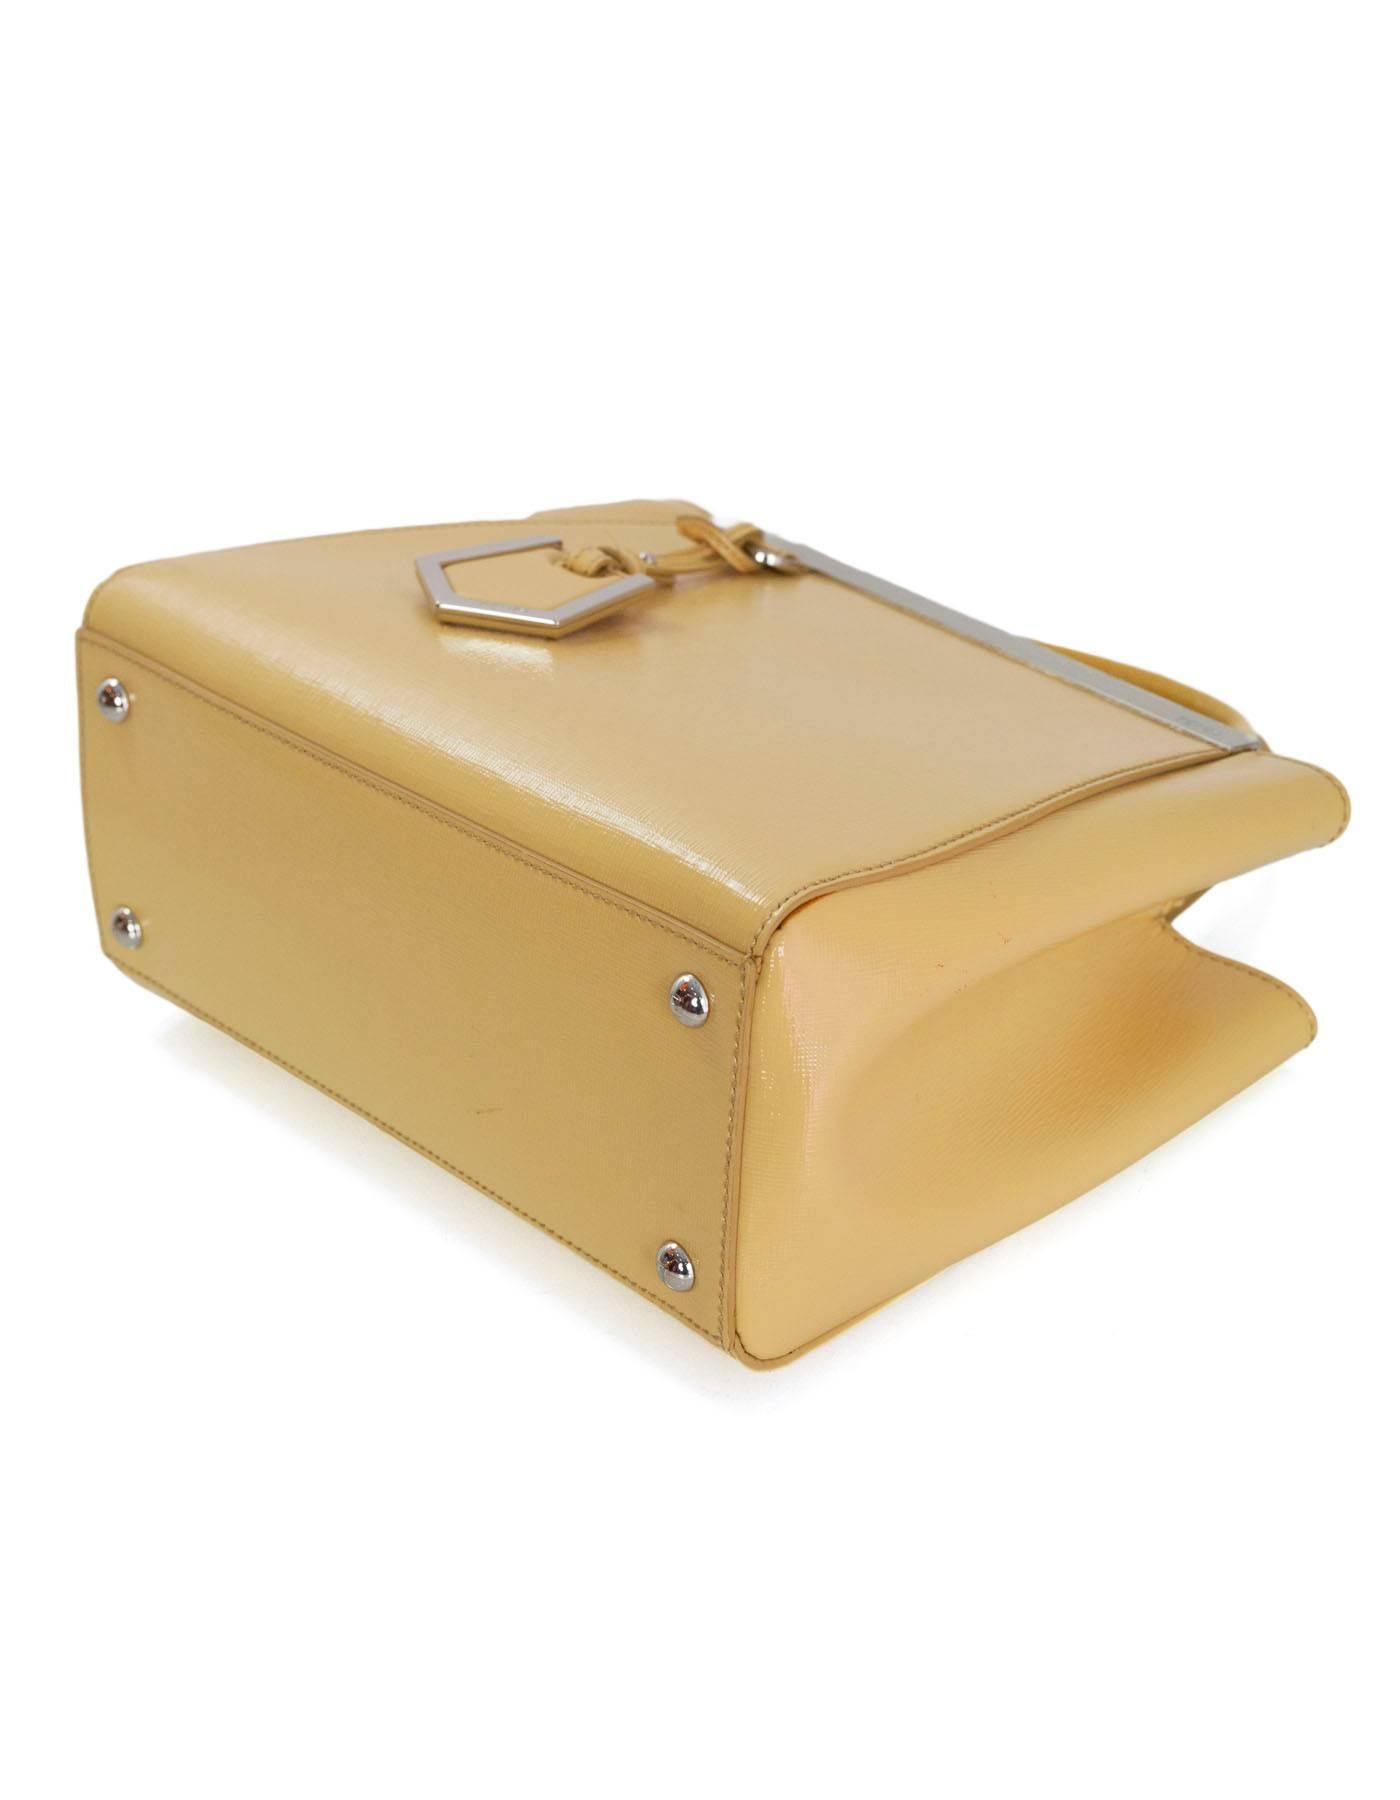 Fendi Yellow Patent Leather Petite 2Jours Satchel Crossbody Bag 2